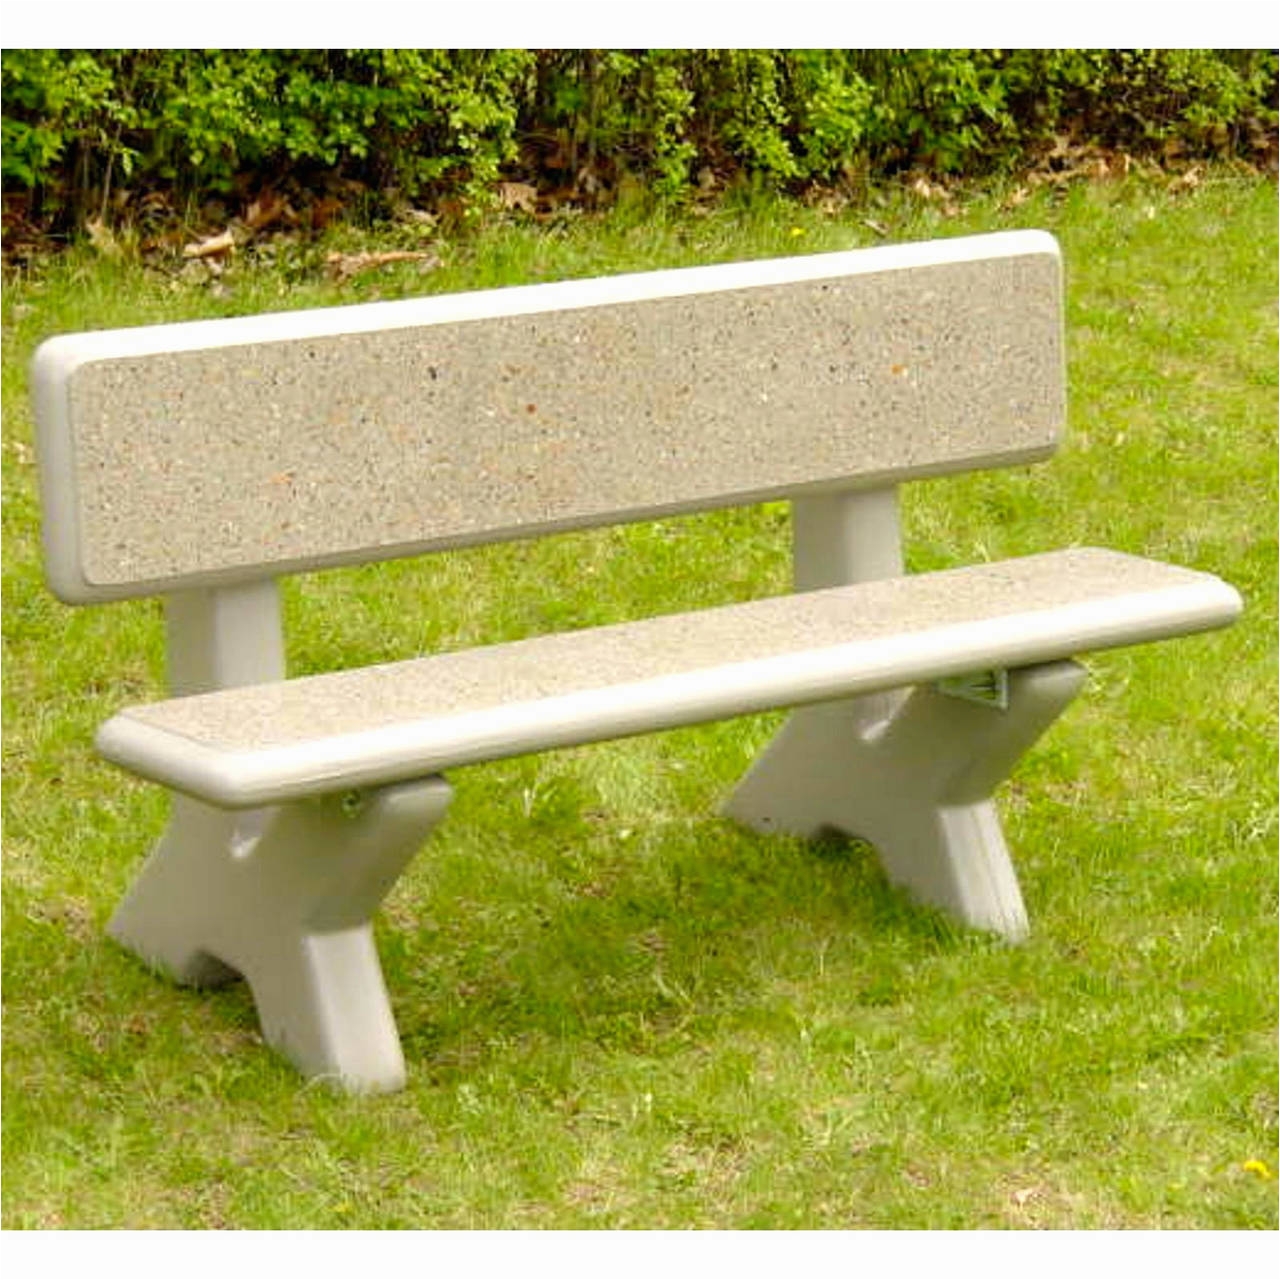 diy park bench elegant lowes patio bench oxobee